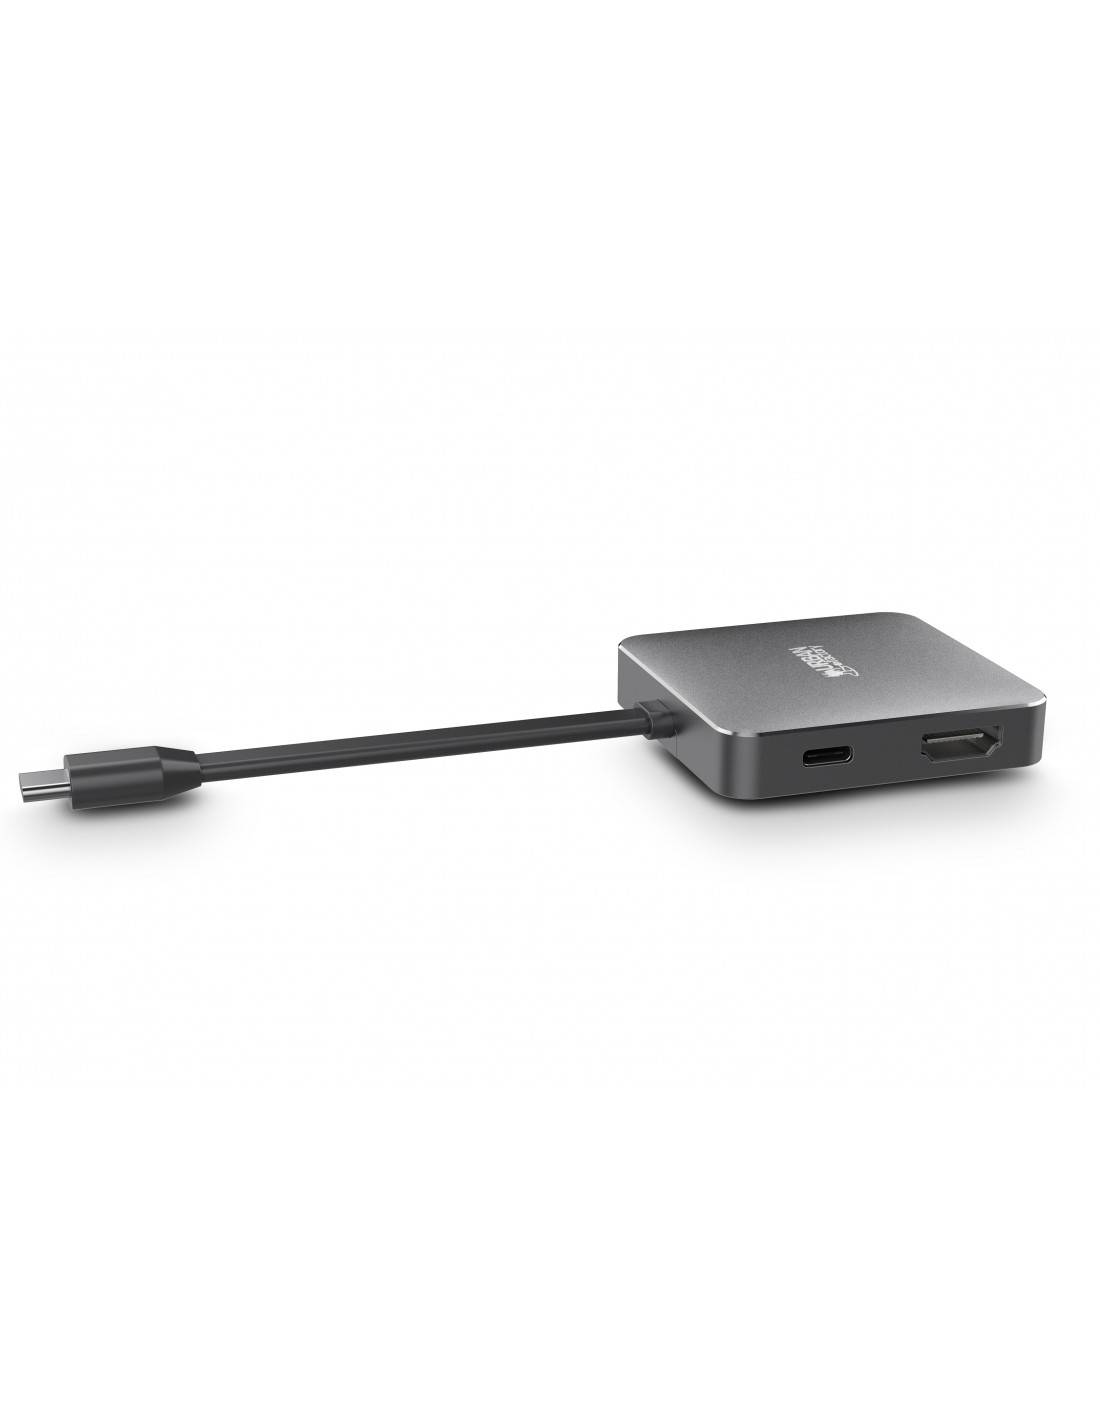 Rca Informatique - image du produit : TYPE-C STATION TRAVEL 1X USB-A 3.0 VGA/HDMI 4K SIDEREAL GRAY